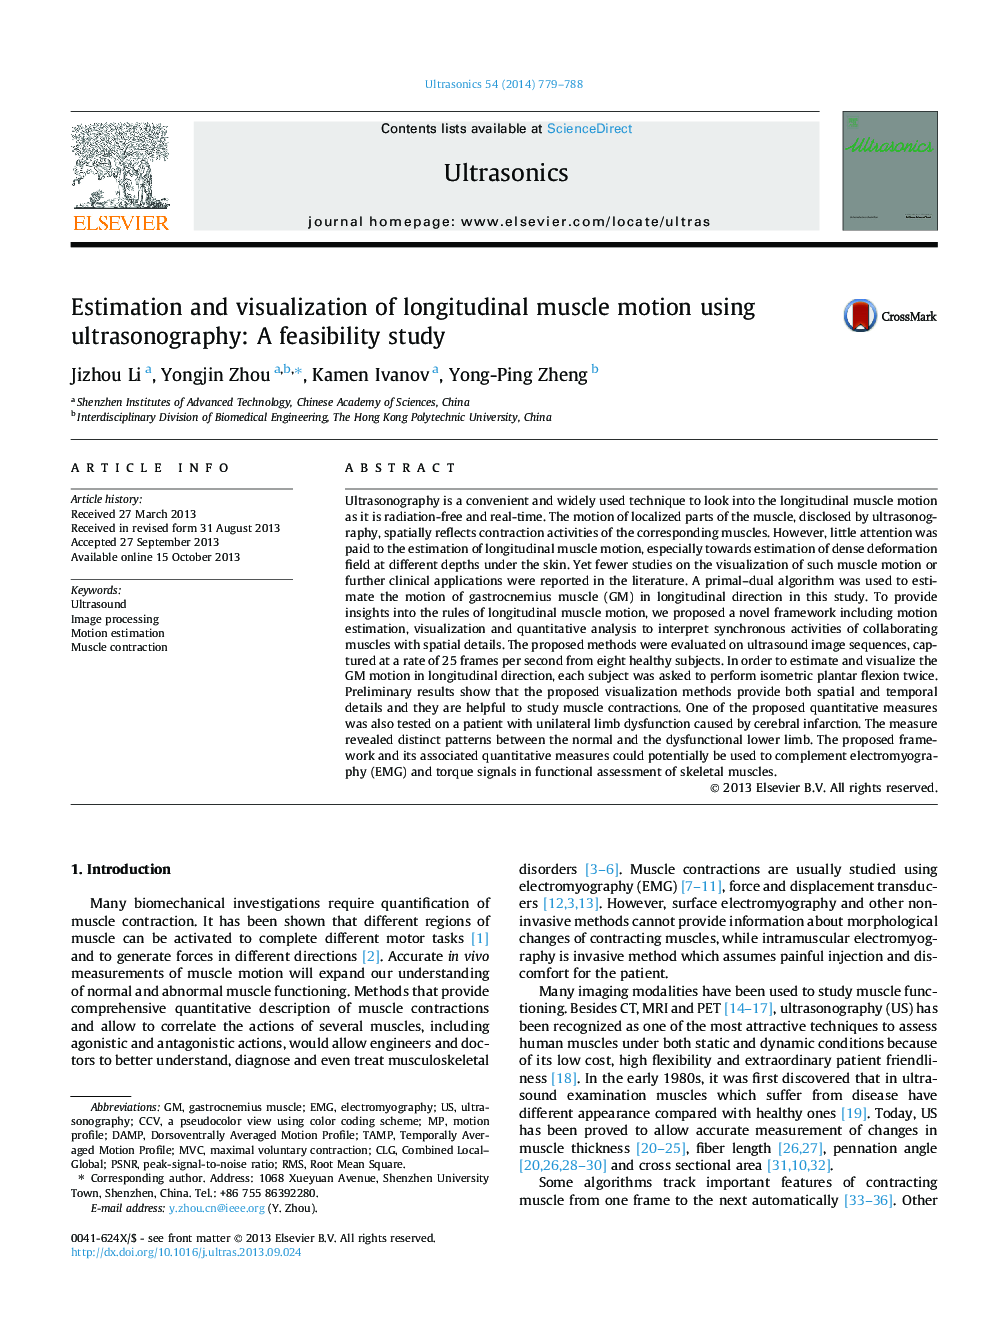 Estimation and visualization of longitudinal muscle motion using ultrasonography: A feasibility study